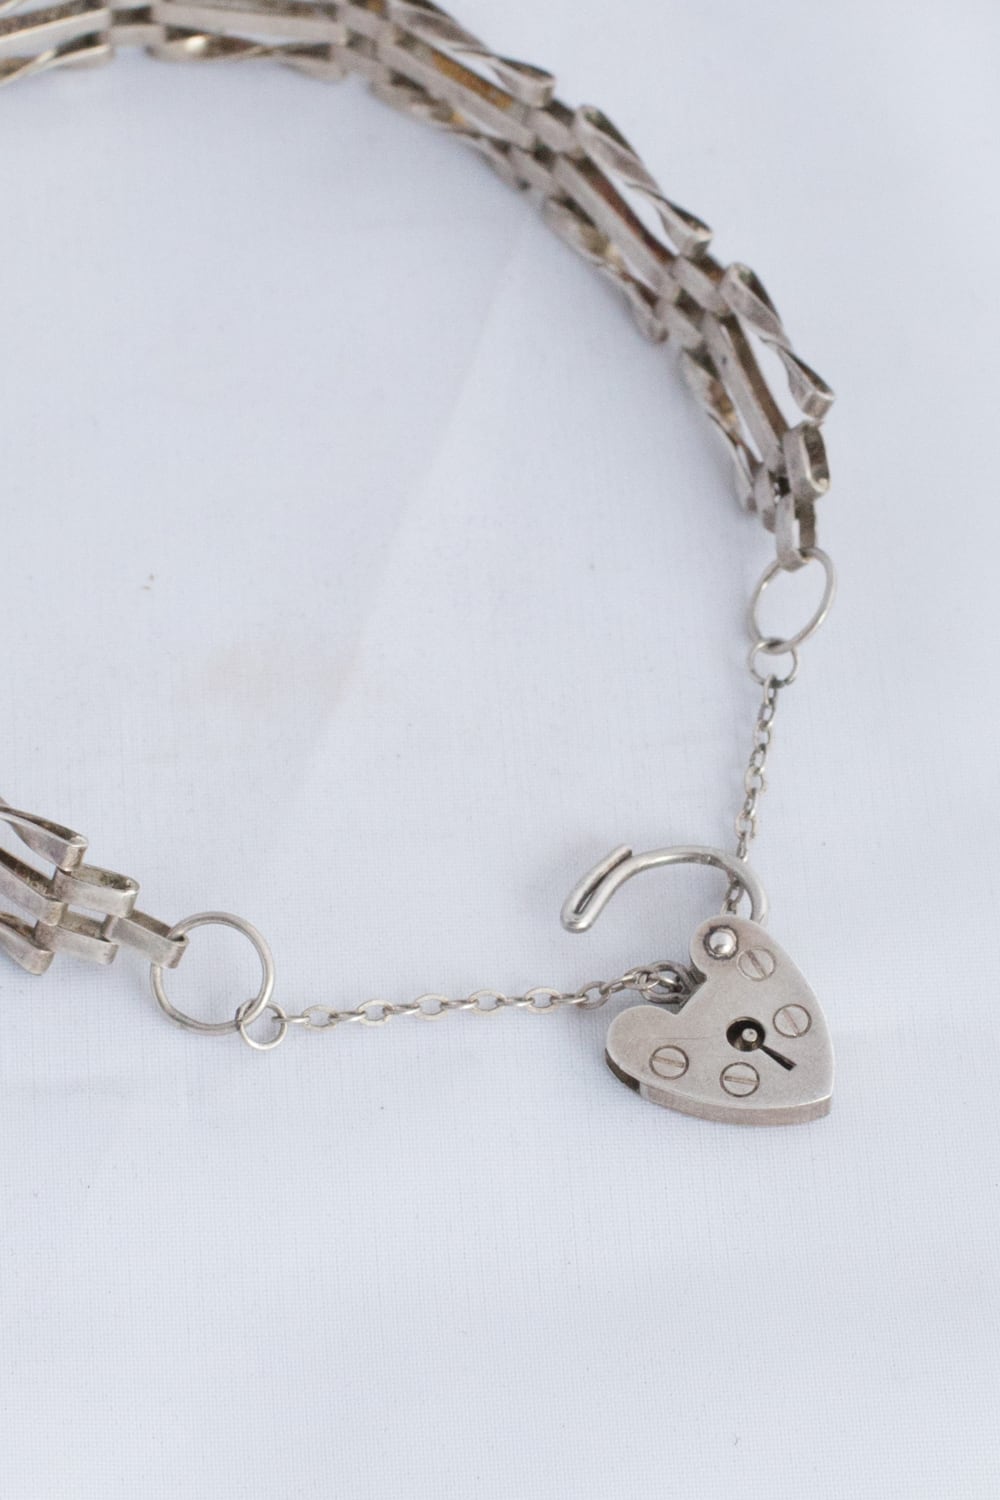 【Run Rabbit Run Vintage】Padlock bracelet silver | ACCIDENT online-shop  powered by BASE